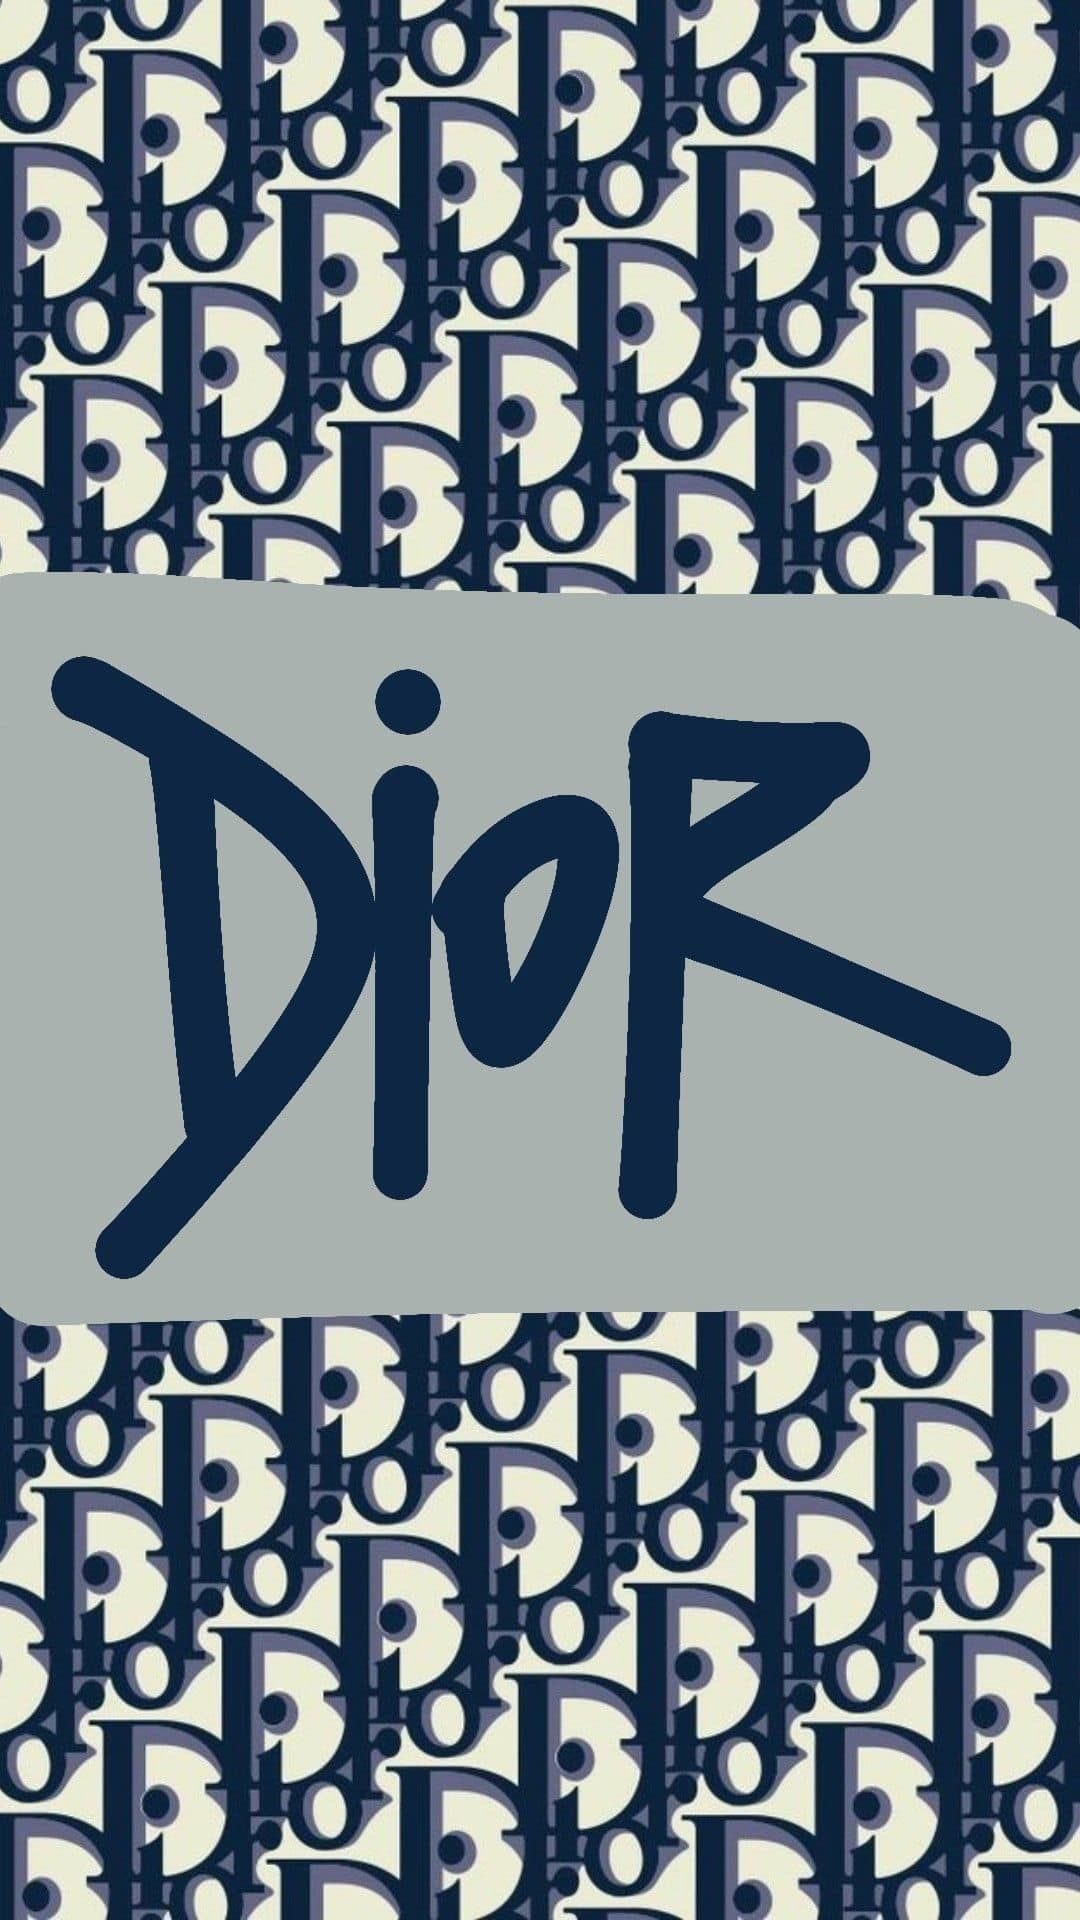 4K Dior Wallpaper Explore more Bernard Arnault, Brand, Christian Dior, Dior, Famous wallpaper.. Dior wallpaper, iPhone wallpaper vintage, iPhone wallpaper photo